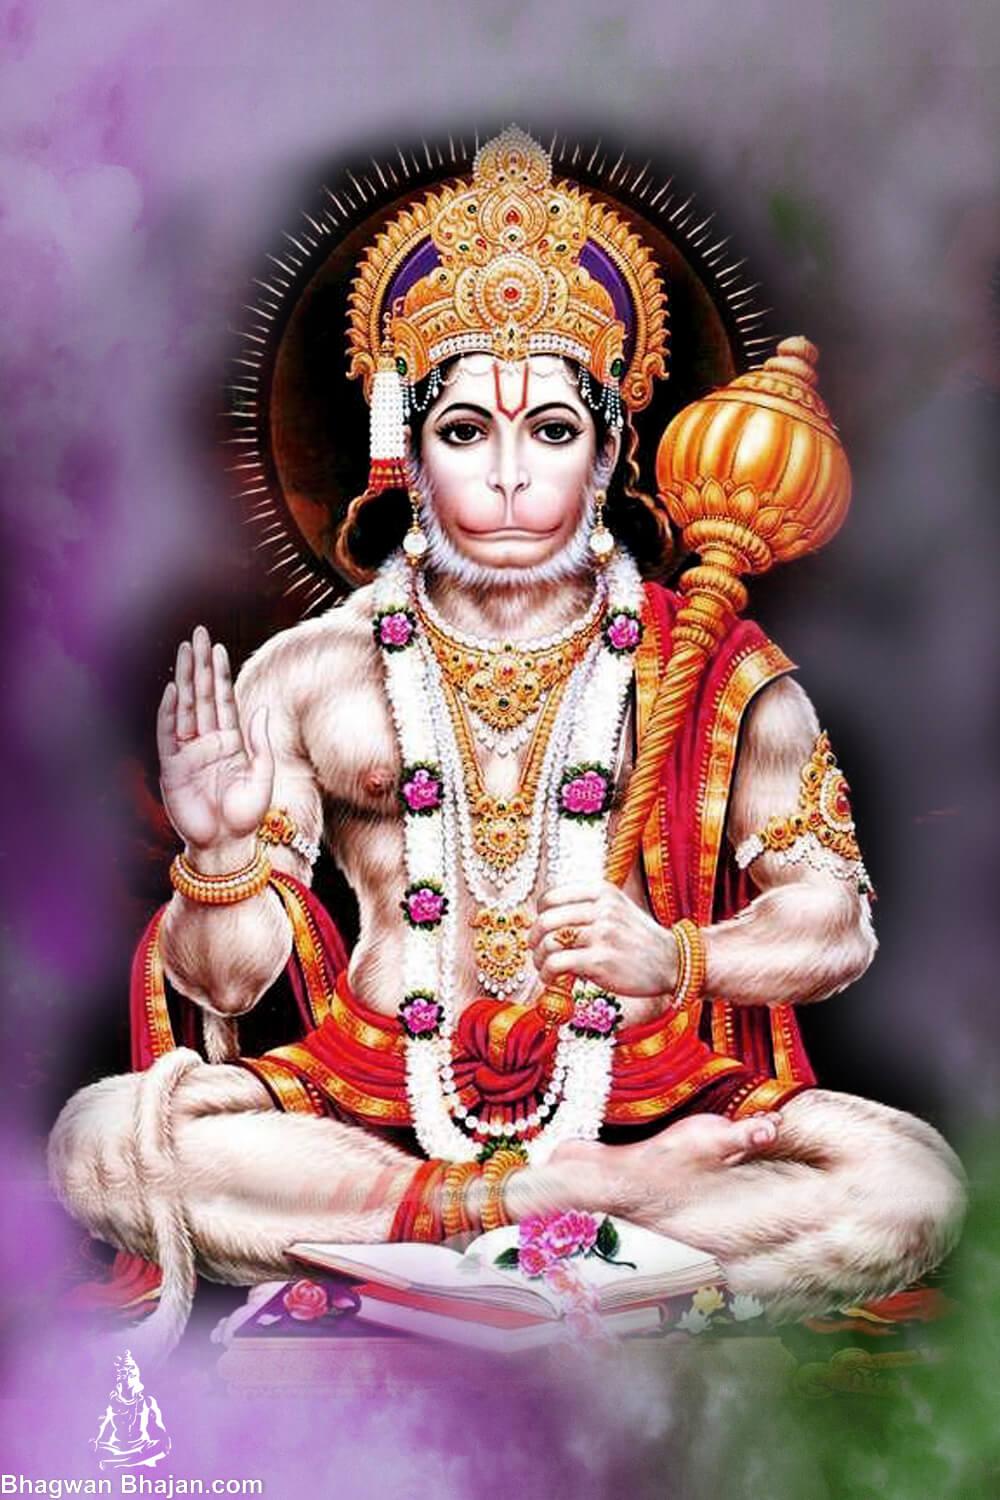 Download Free HD Wallpaper of Shree Hanuman. Bajrangbali